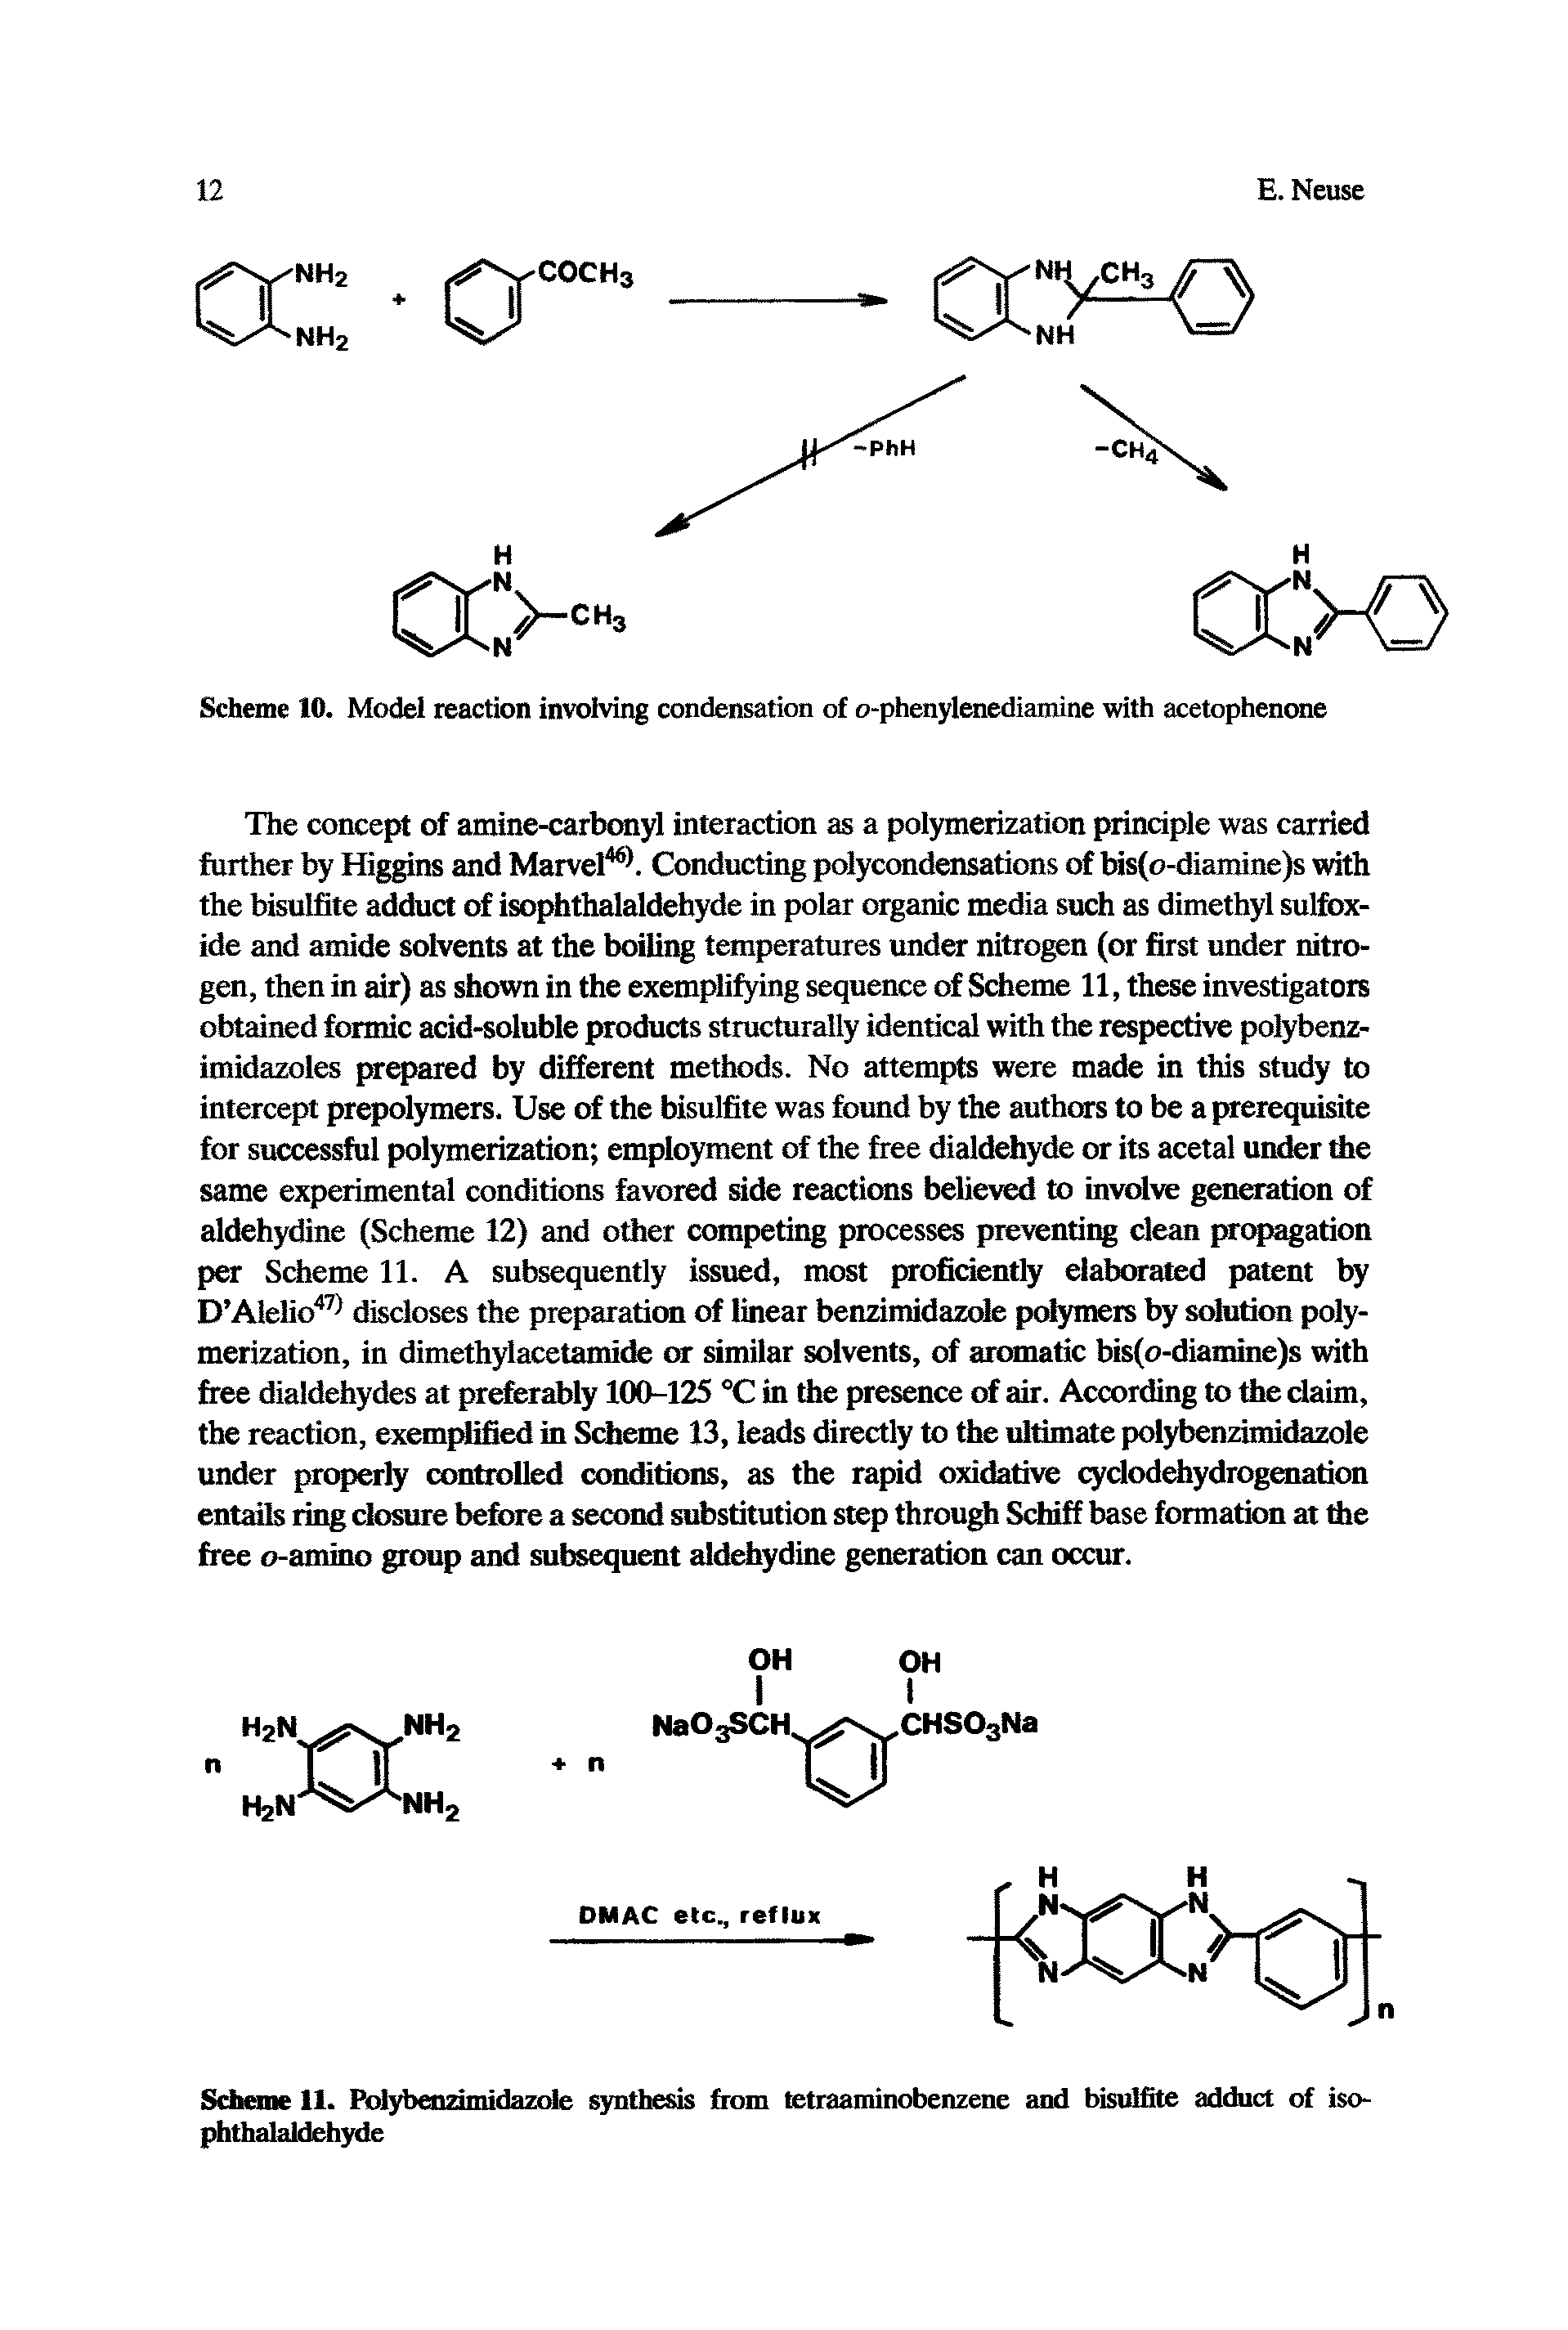 Scheme 11. Polybenzimidazole synthesis from tetraaminobenzene and bisulfite adduct of isophthalaldehyde...